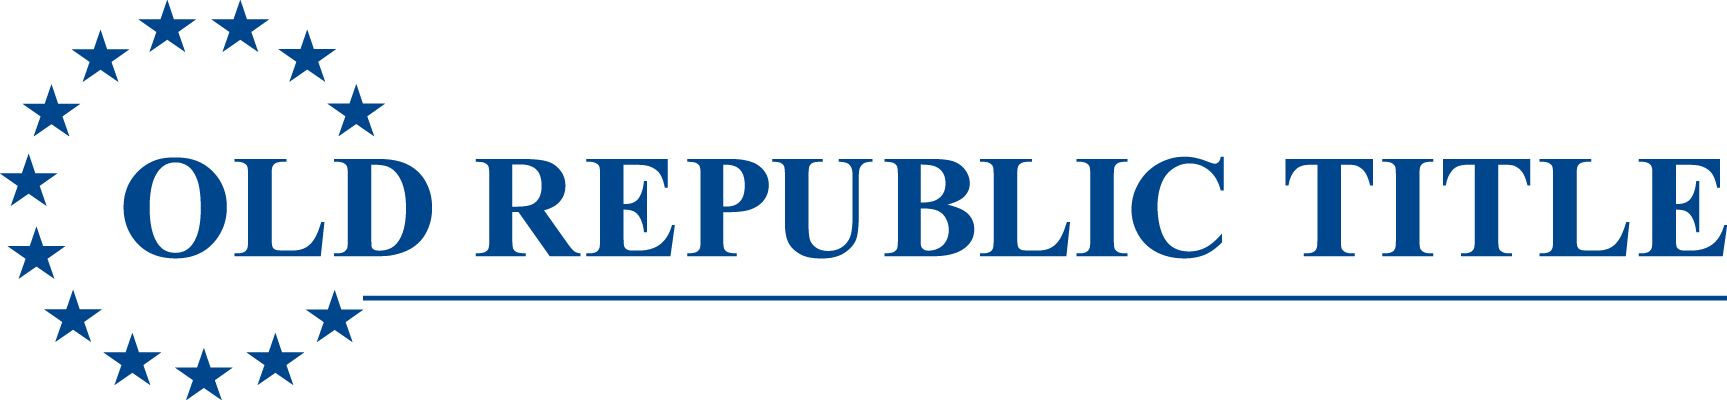 Old Republic Title Logo (2).jpg